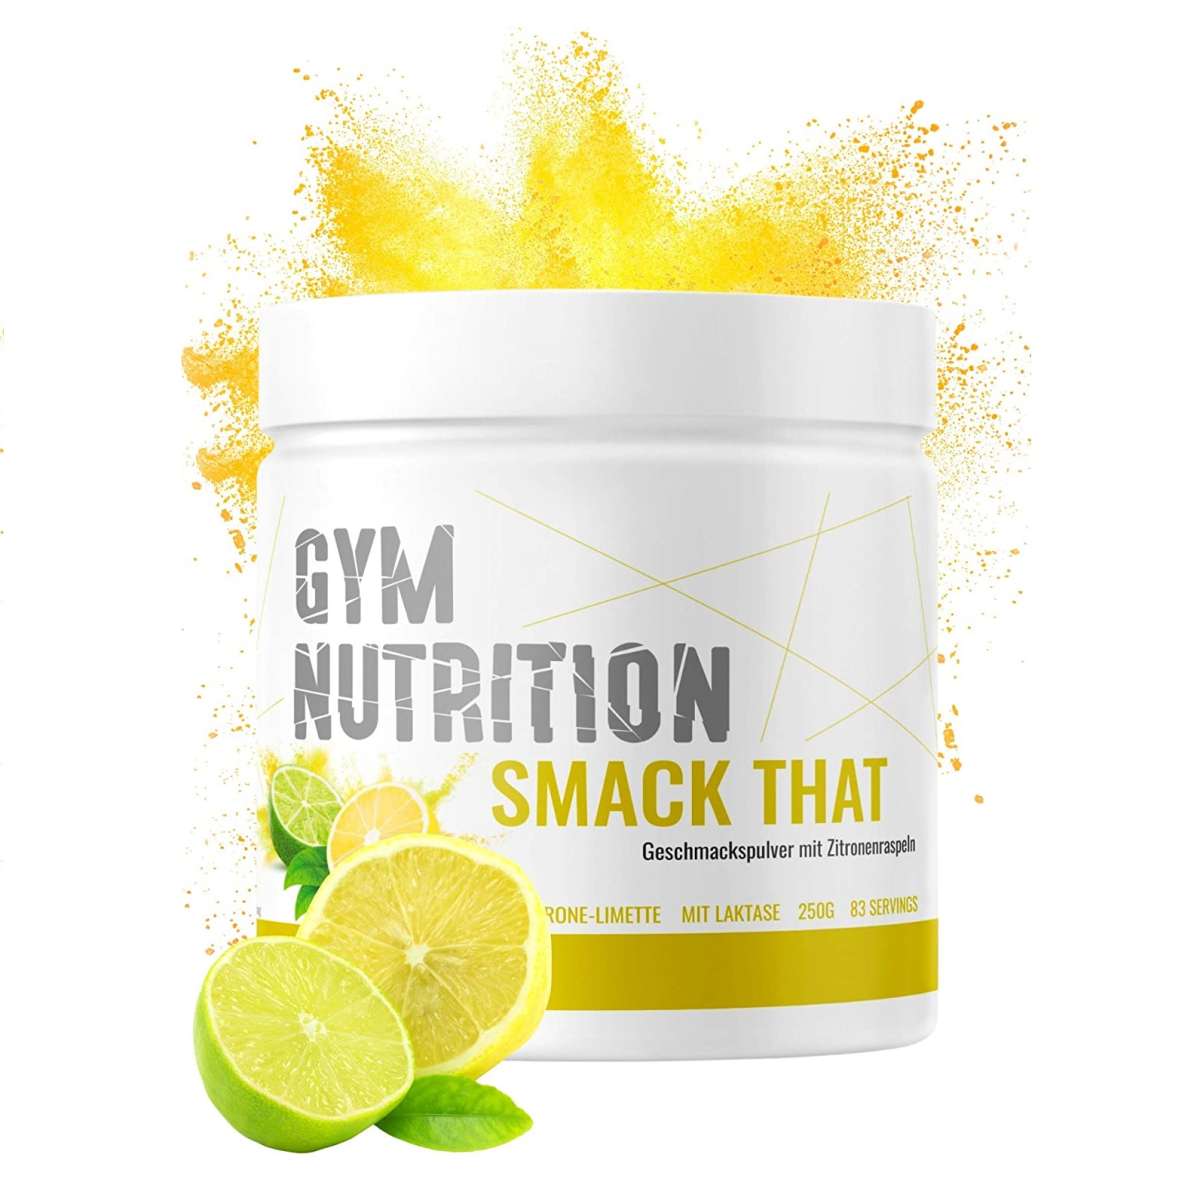 Gym Nutrition SMACK THAT Geschmackspulver mit Lactase - 250g Flavour